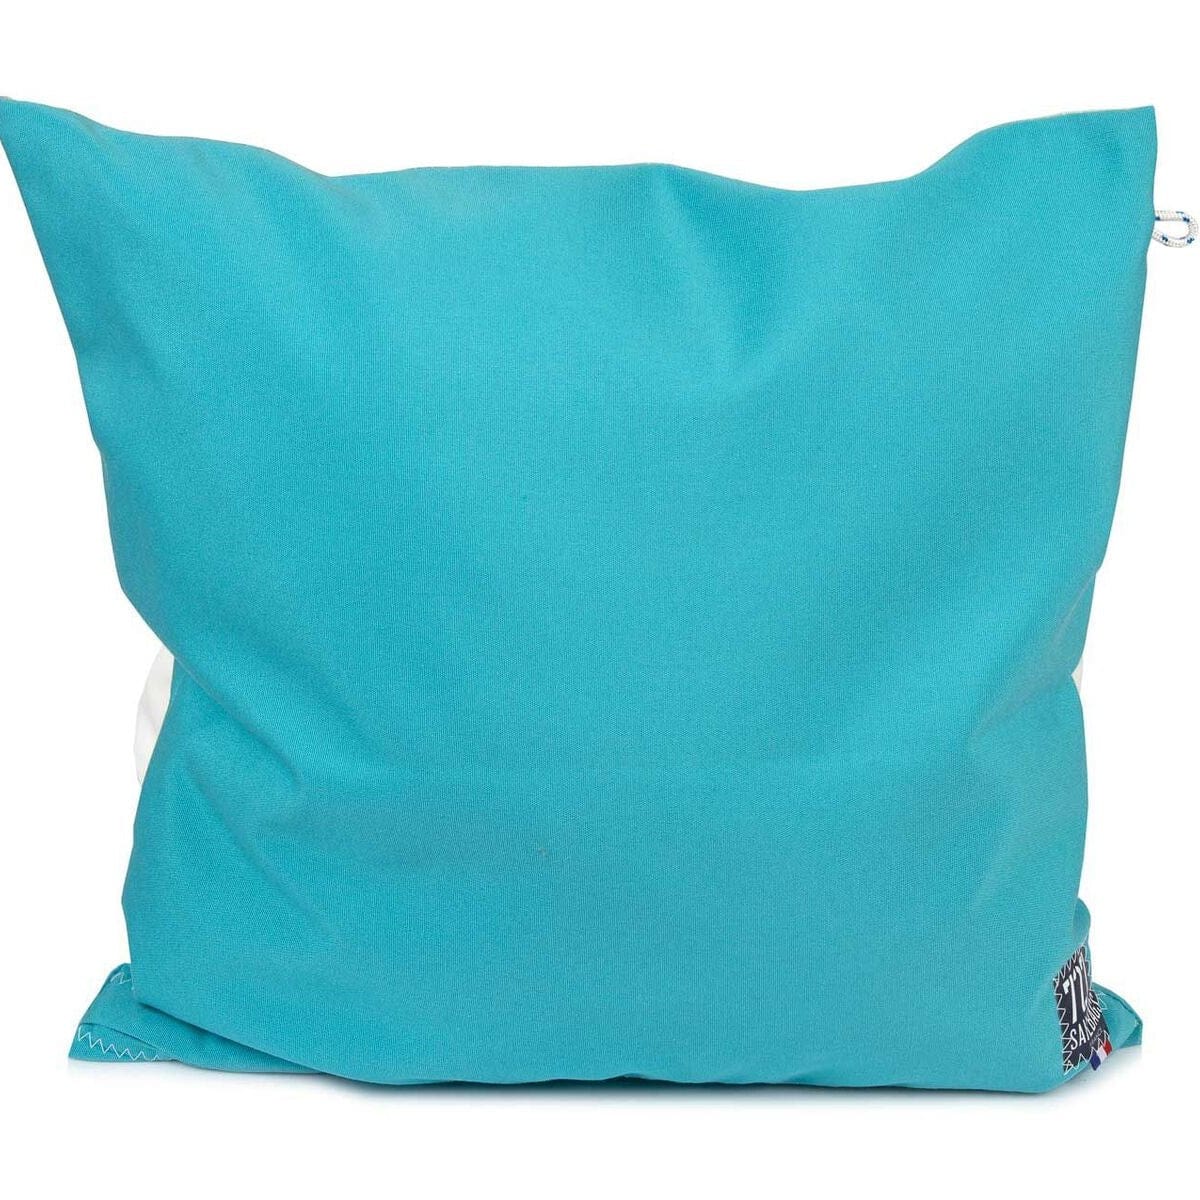 727 Sailbags Cushion 50 x 50 | Turquoise 9 Grey